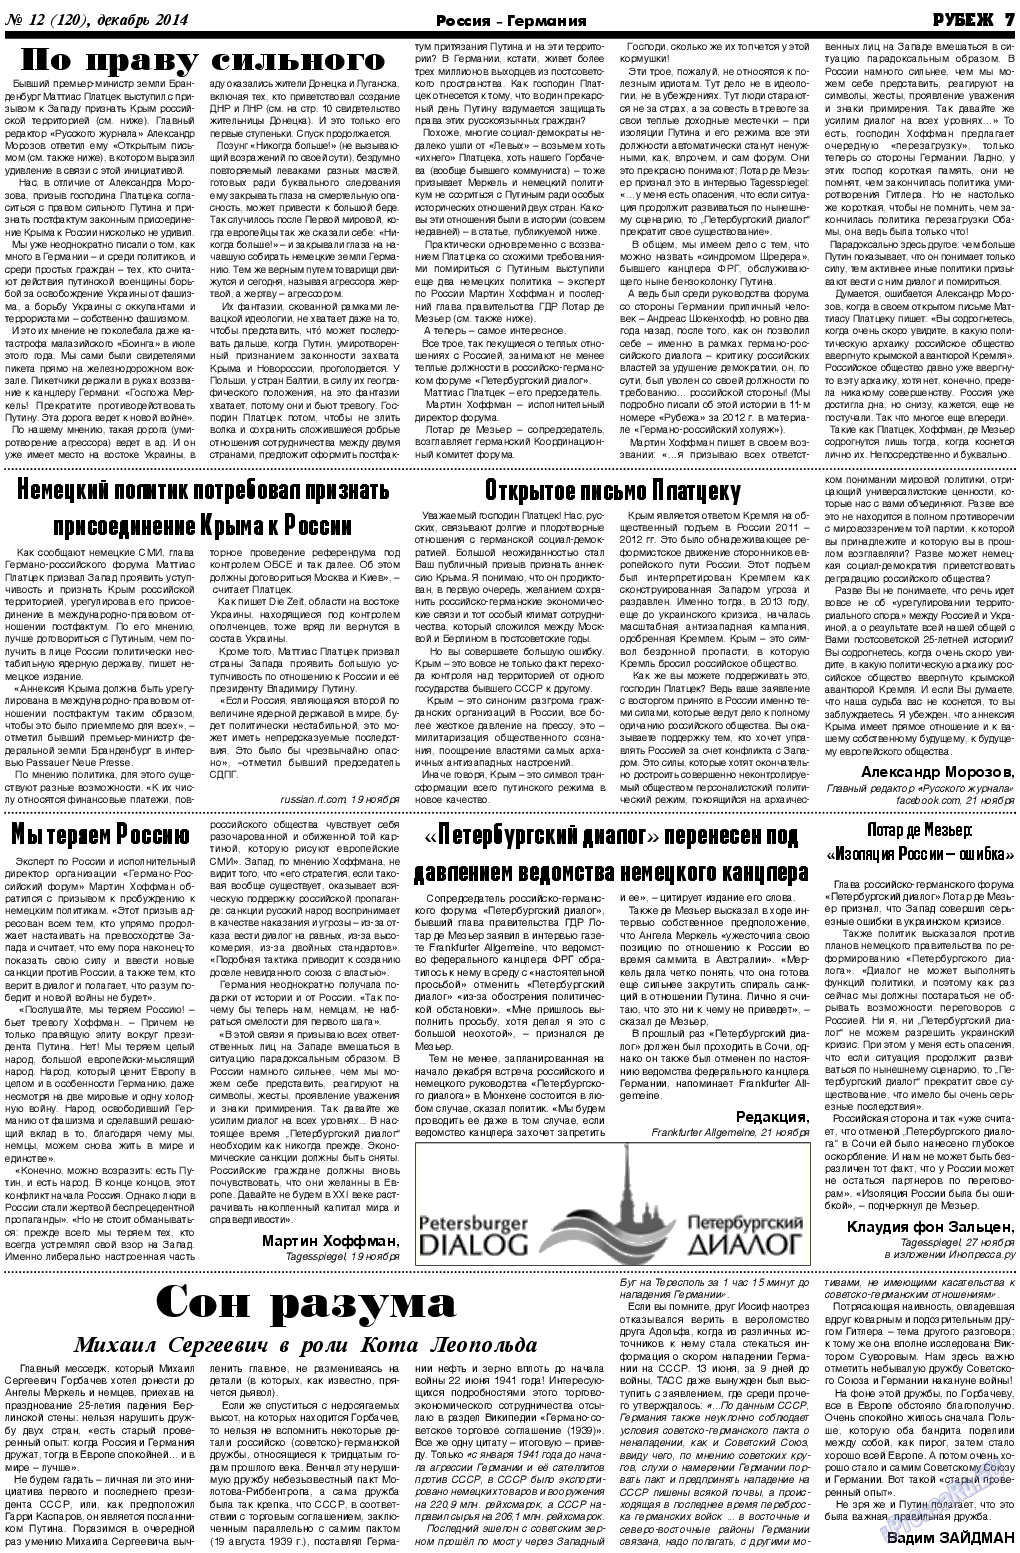 Рубеж, газета. 2014 №12 стр.7